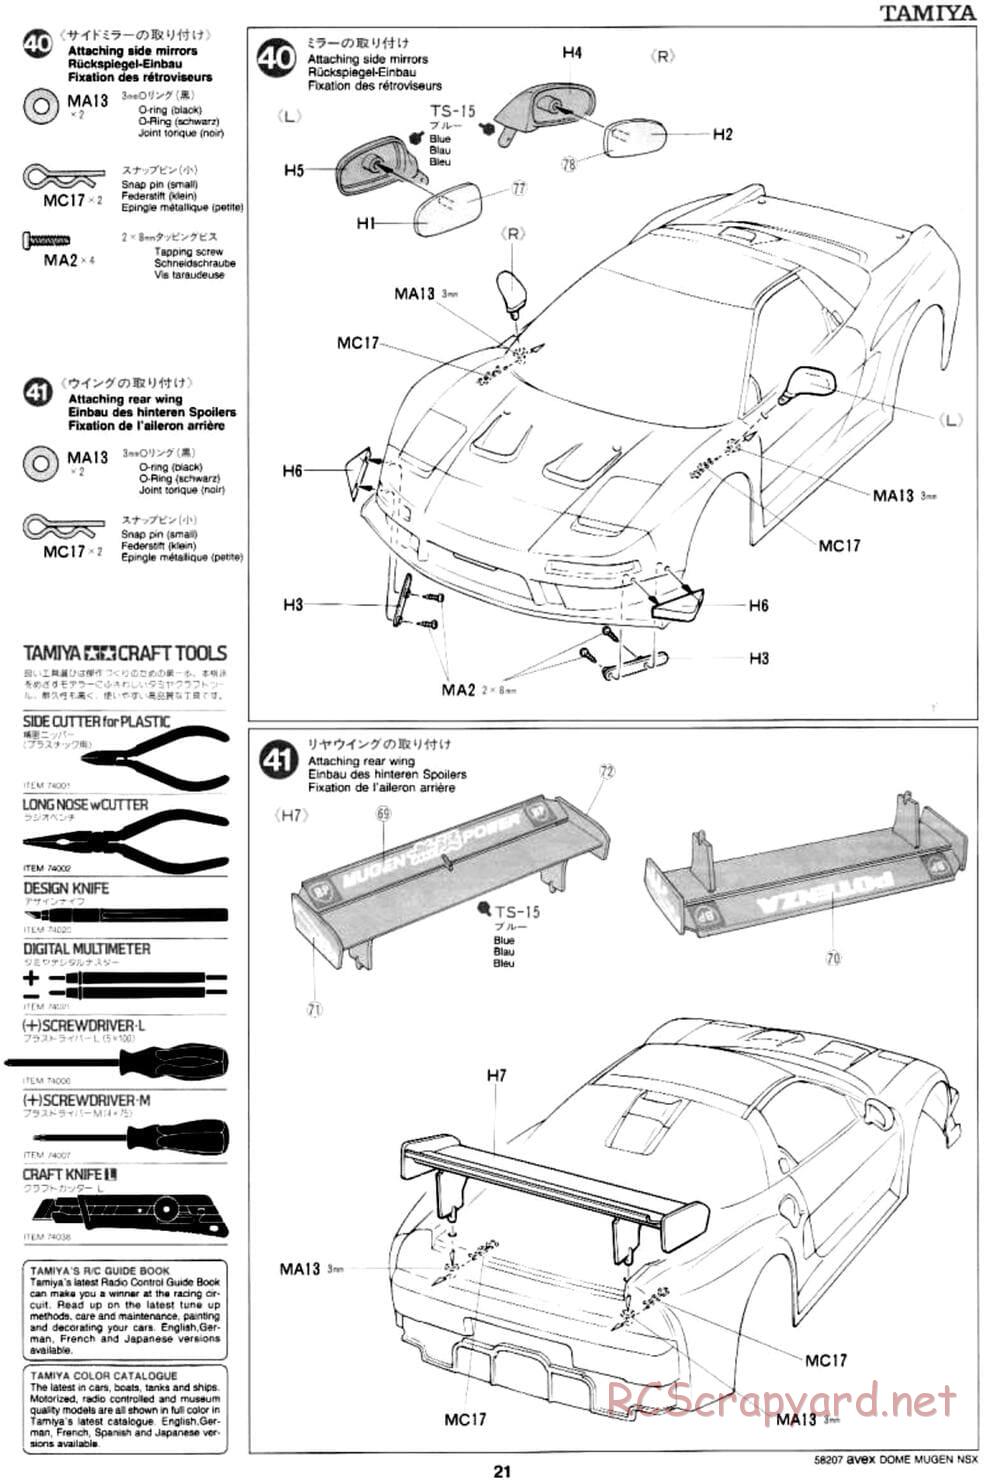 Tamiya - Avex Dome Mugen NSX - TA-03R Chassis - Manual - Page 21